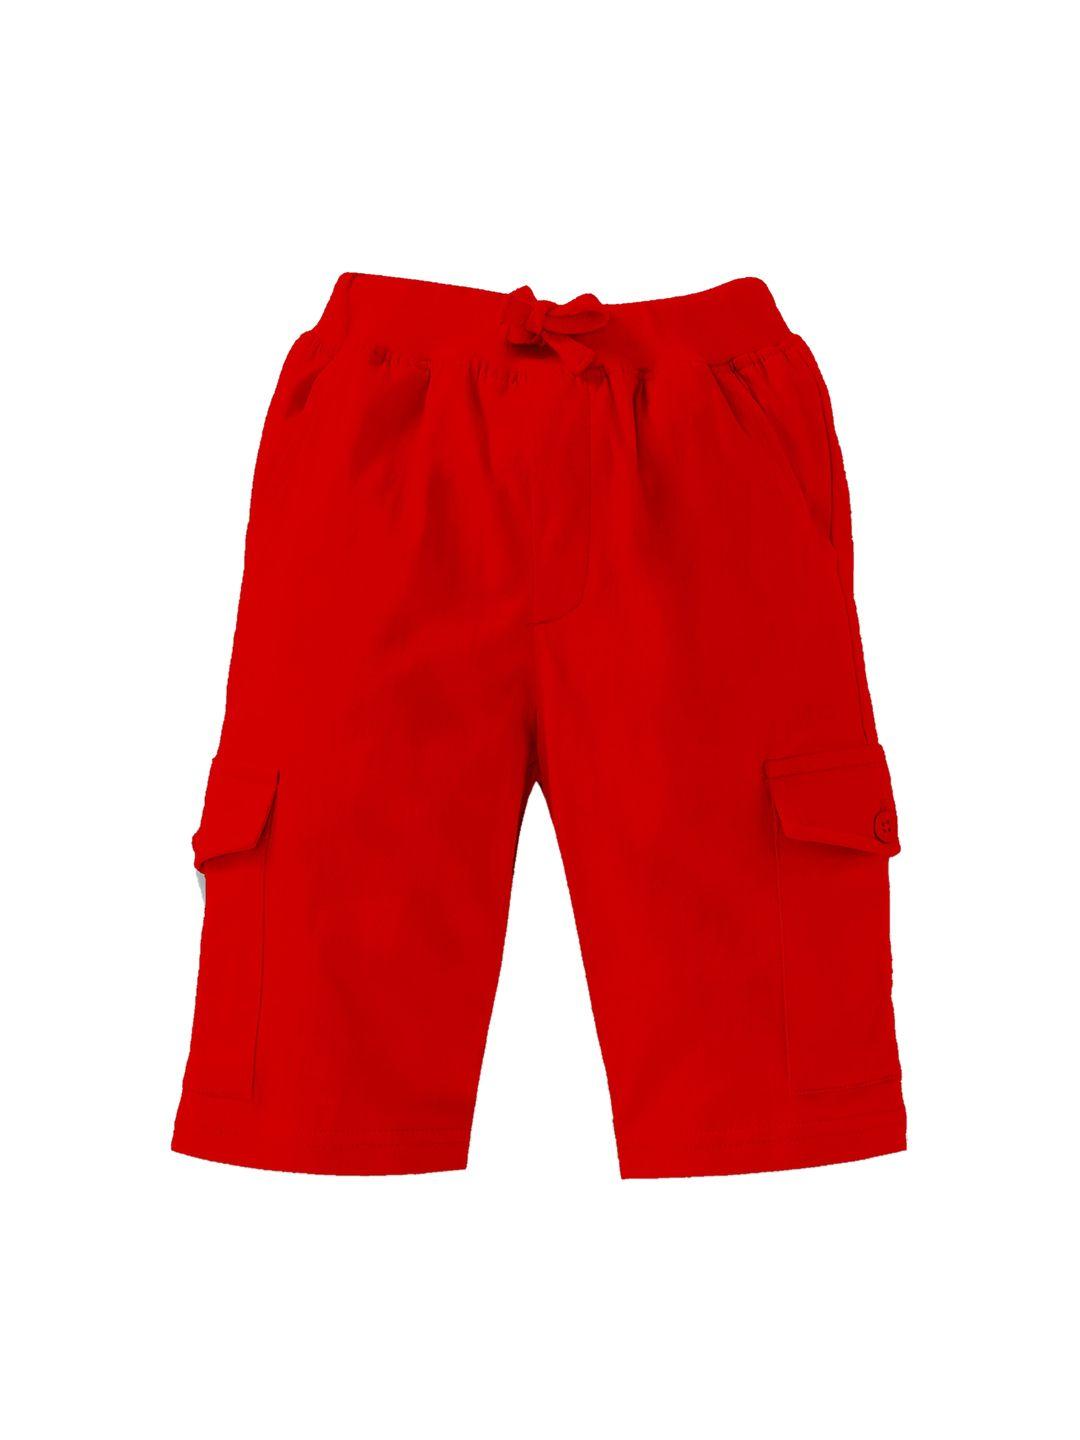 KiddoPanti Boys Red Cotton Shorts